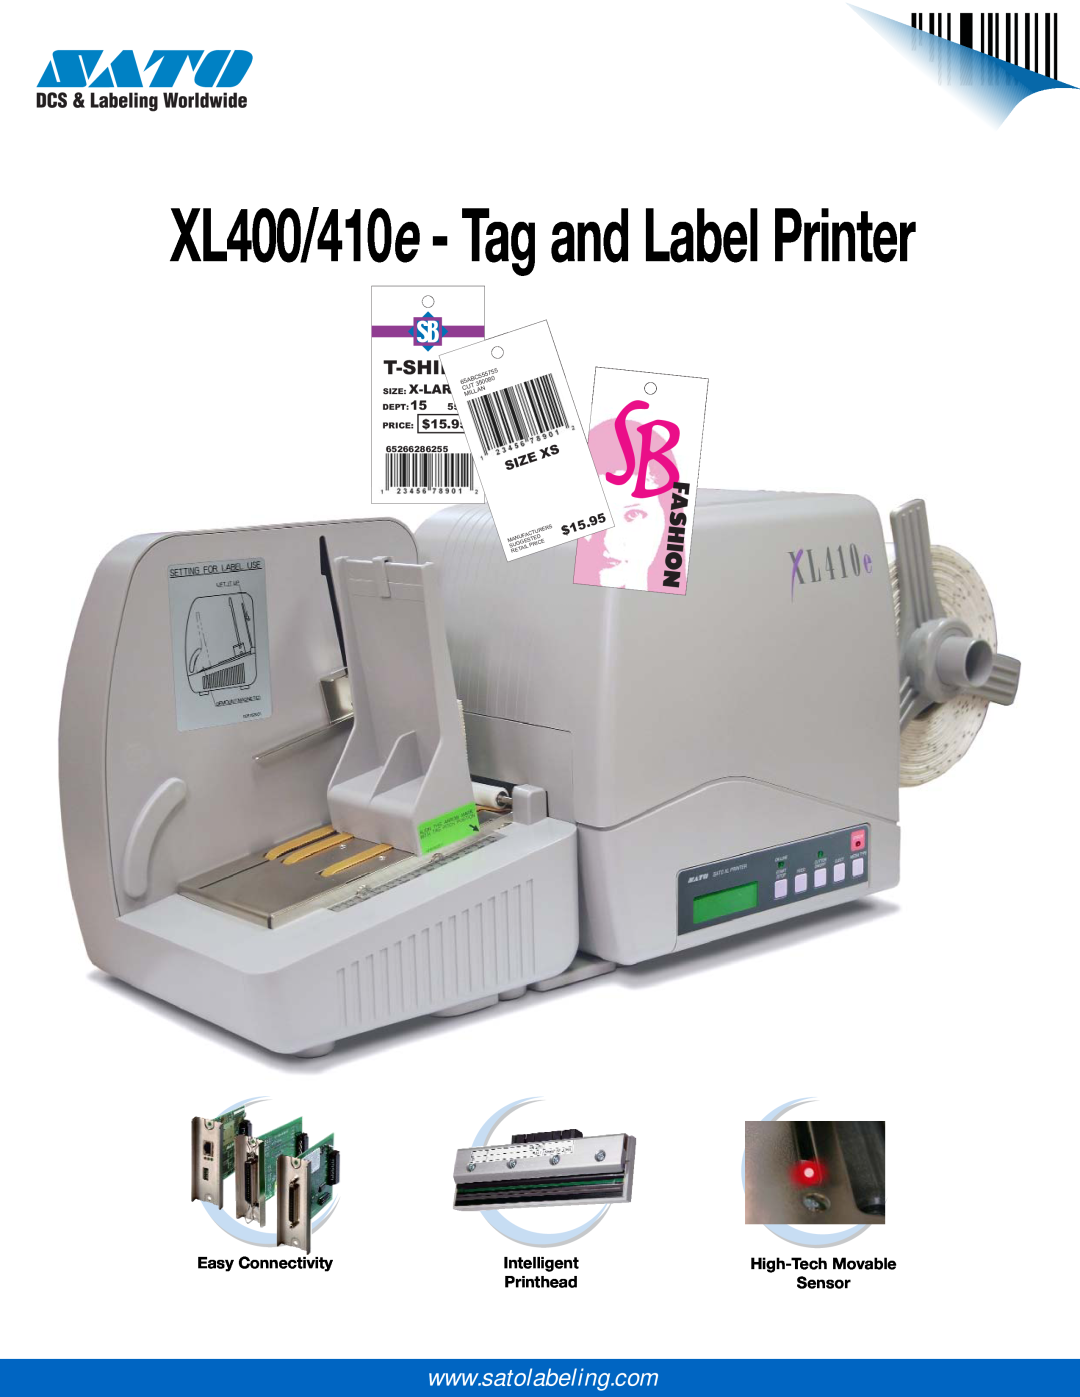 SATO manual XL400/410e - Tag and Label Printer, Easy Connectivity, Intelligent, High-Tech Movable, Printhead, Sensor 